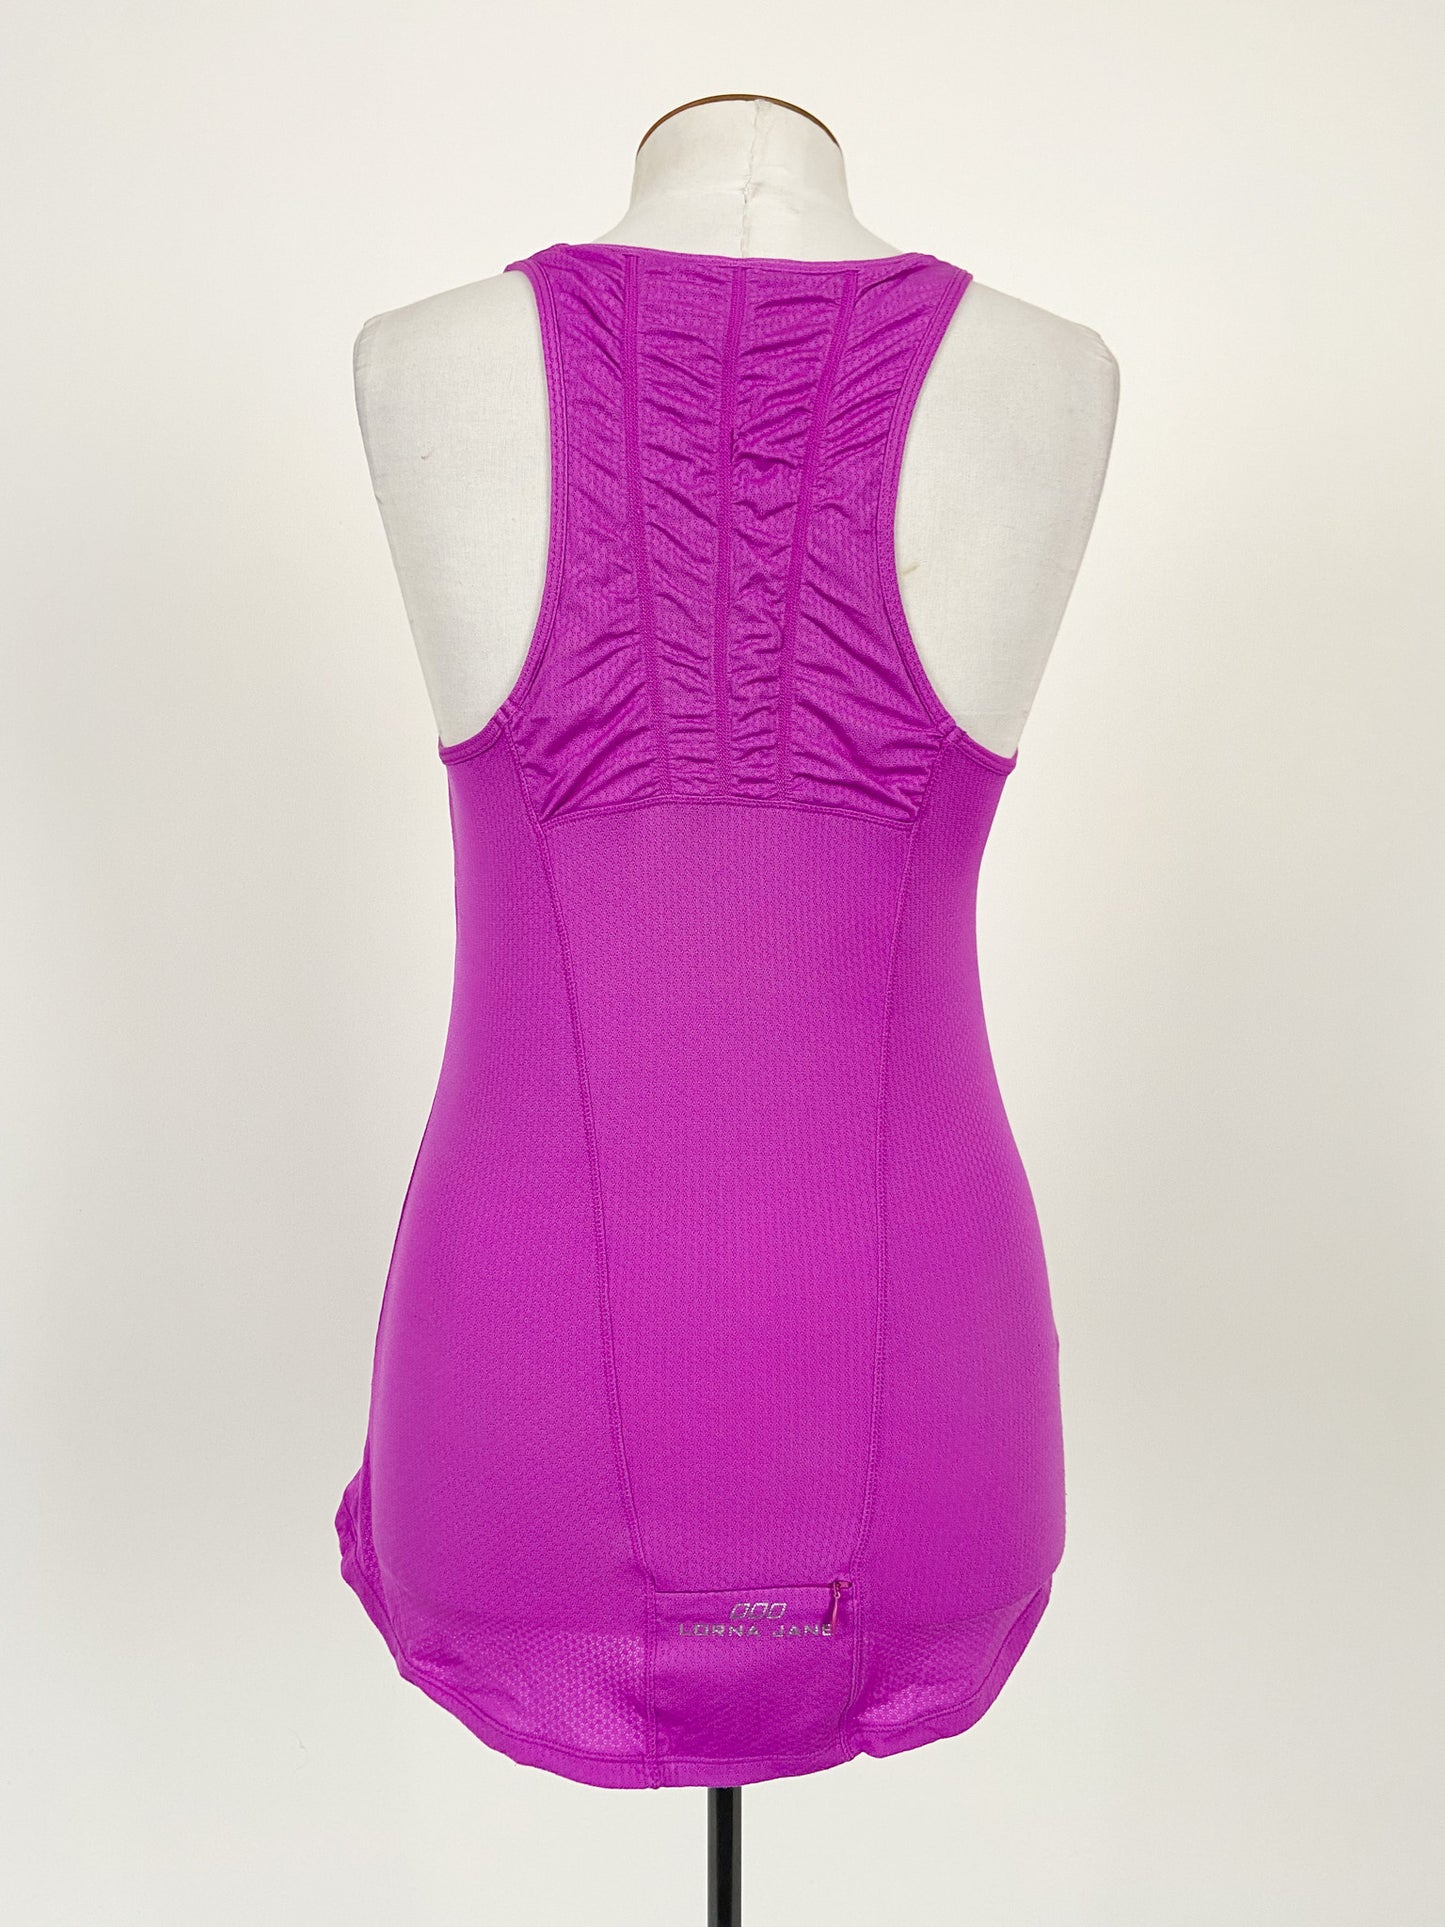 Lorna Jane | Purple Casual Activewear Top | Size L